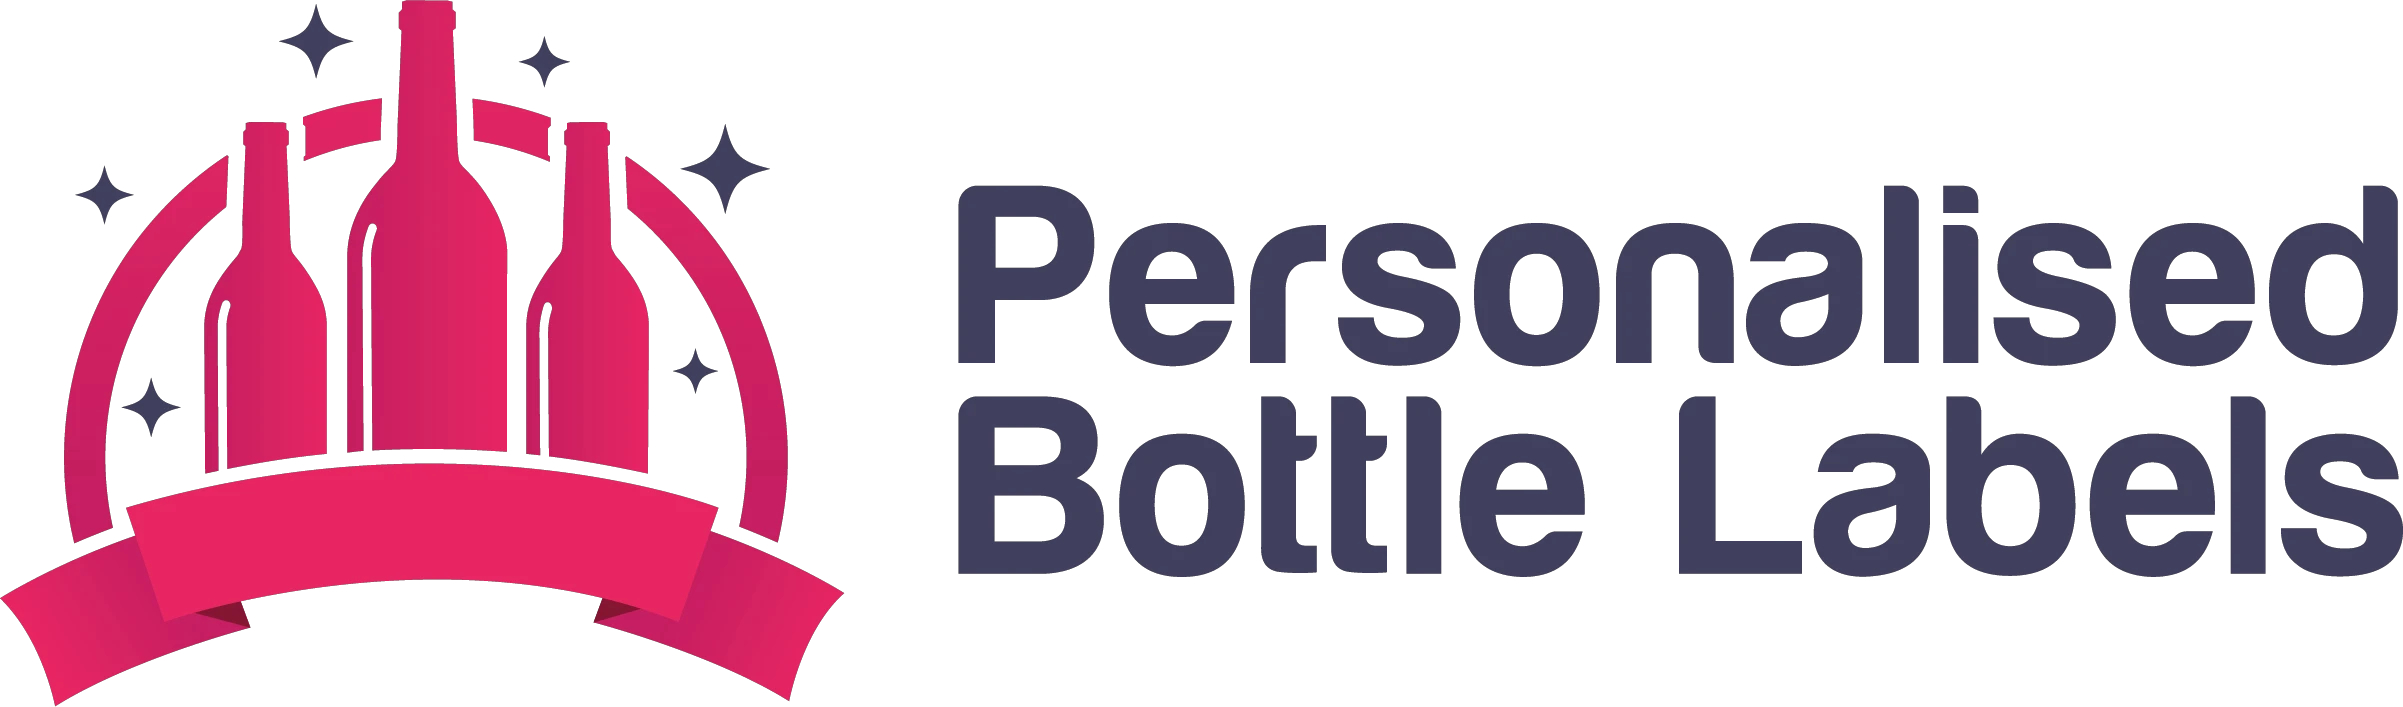 personalisedbottlelabels.co.uk